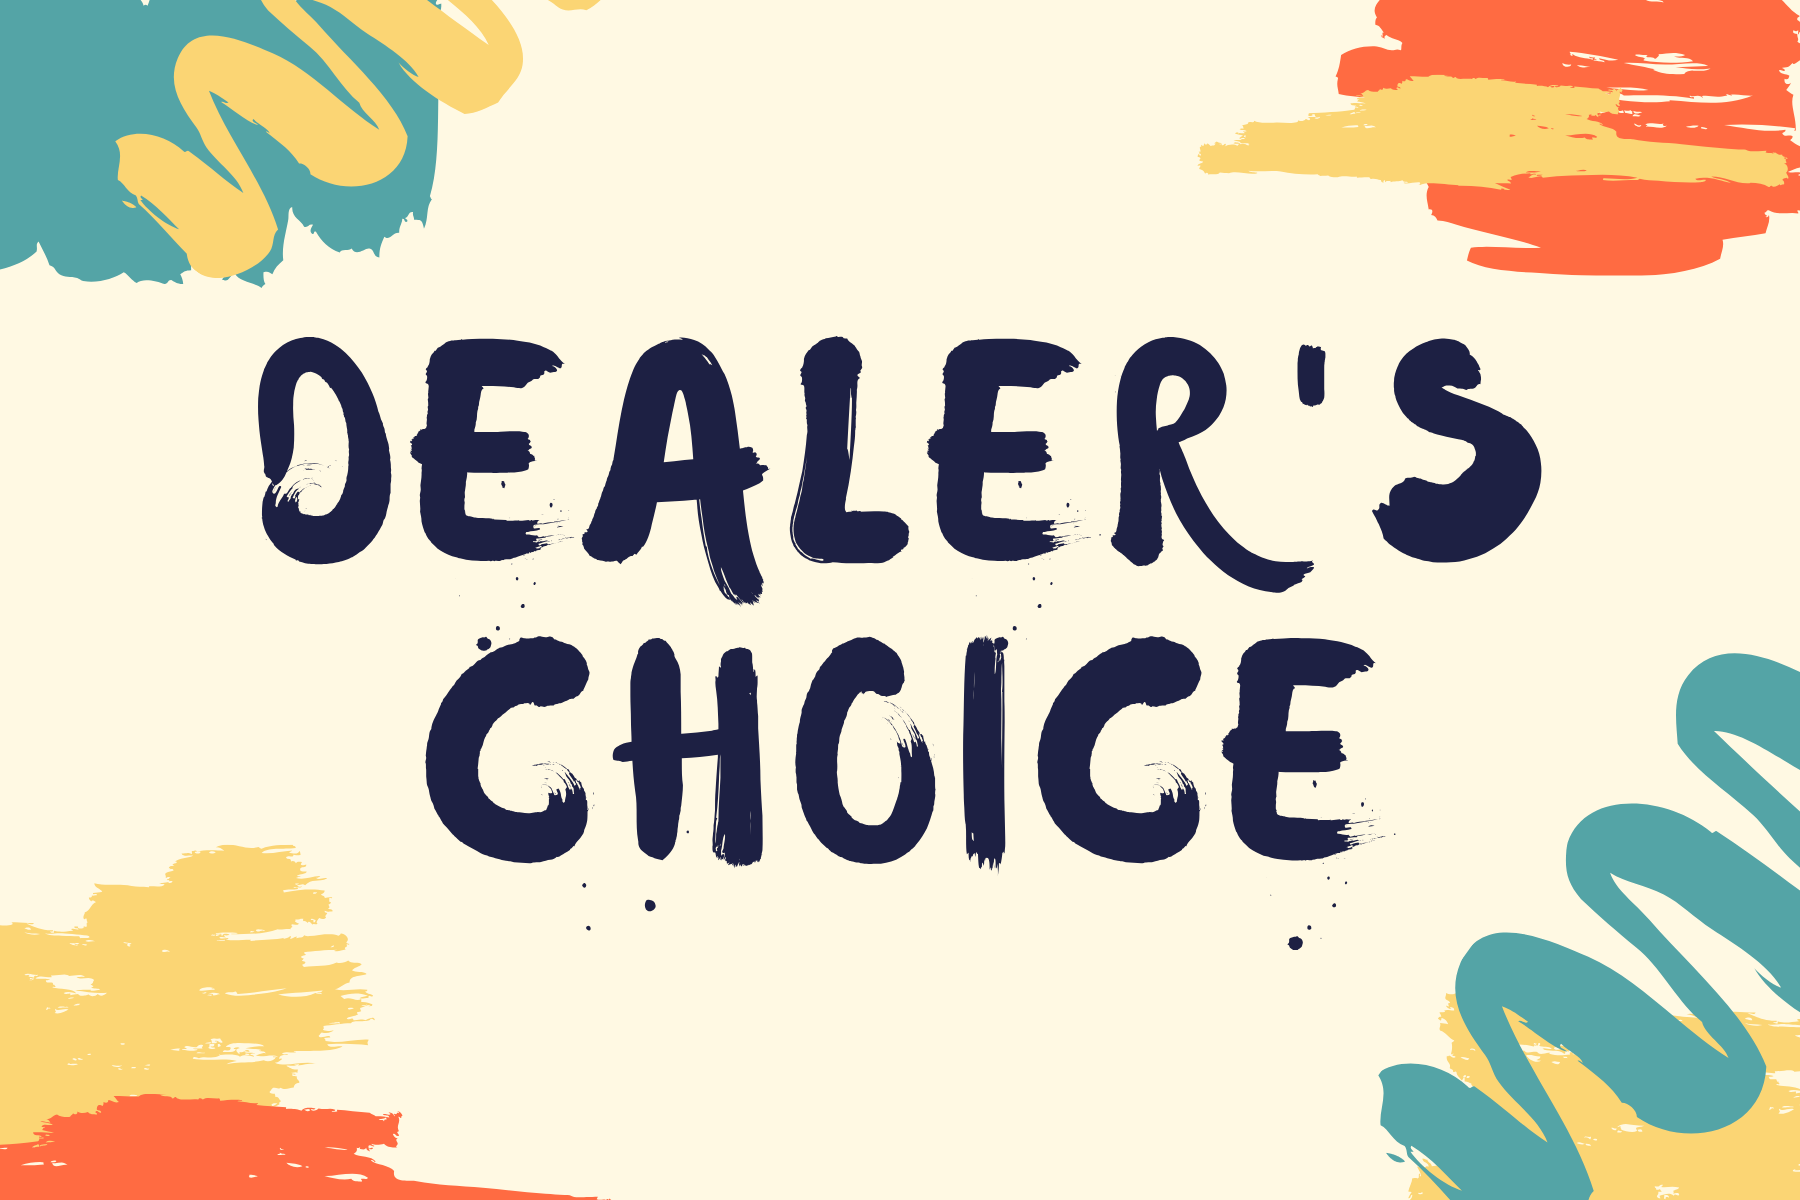 Dealer's Choice Cotton Rounds - Momako Designs